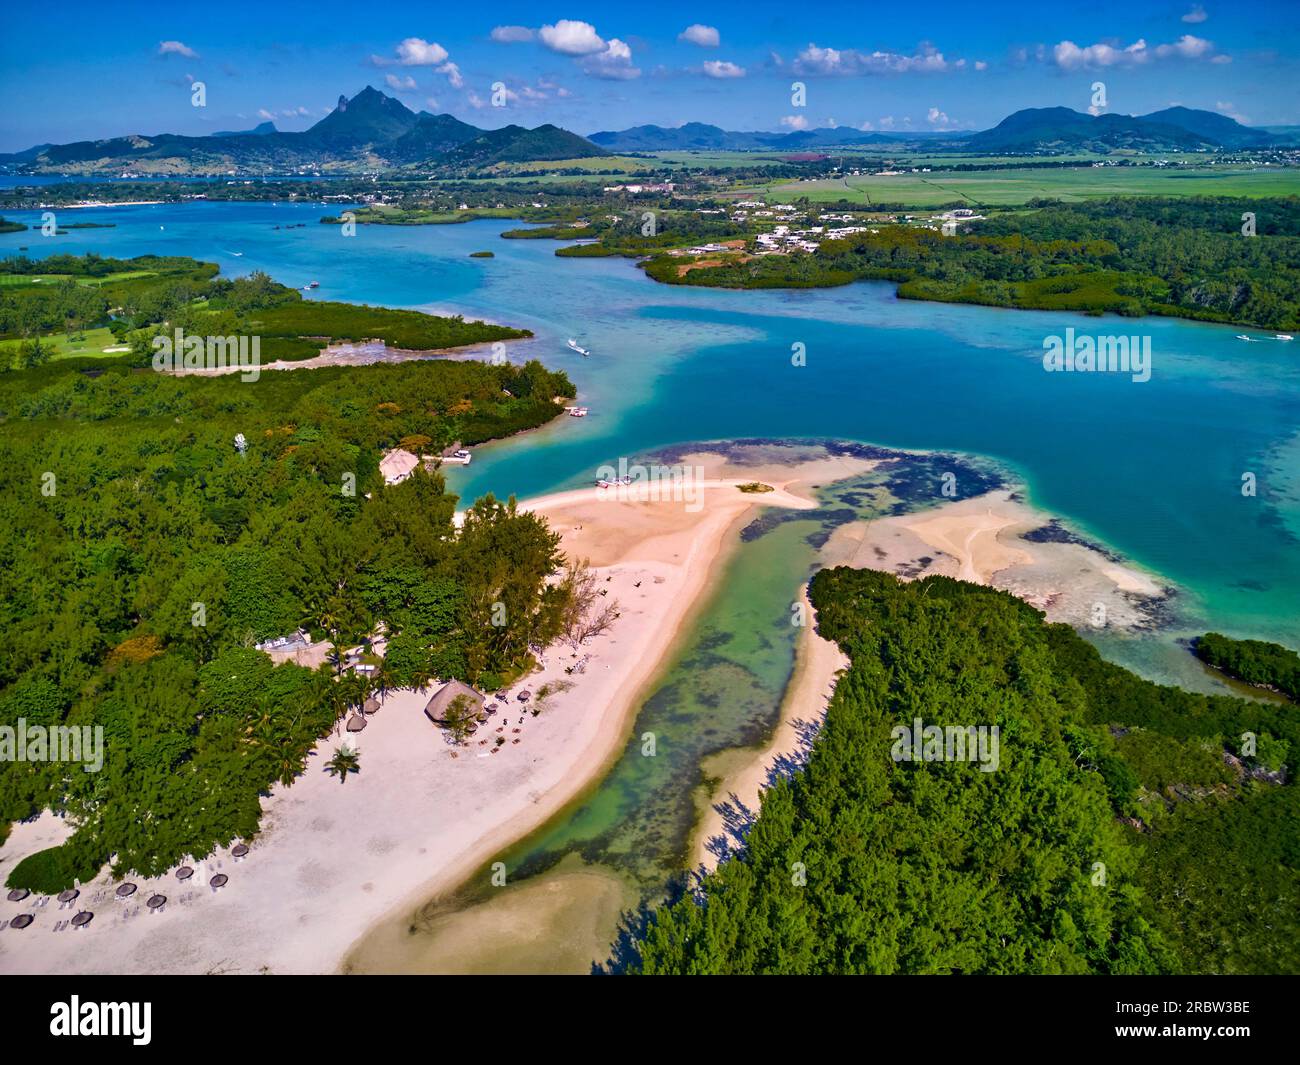 Mauritius, Flacq district, Ile aux Cerfs island, deer island, aerial view Stock Photo